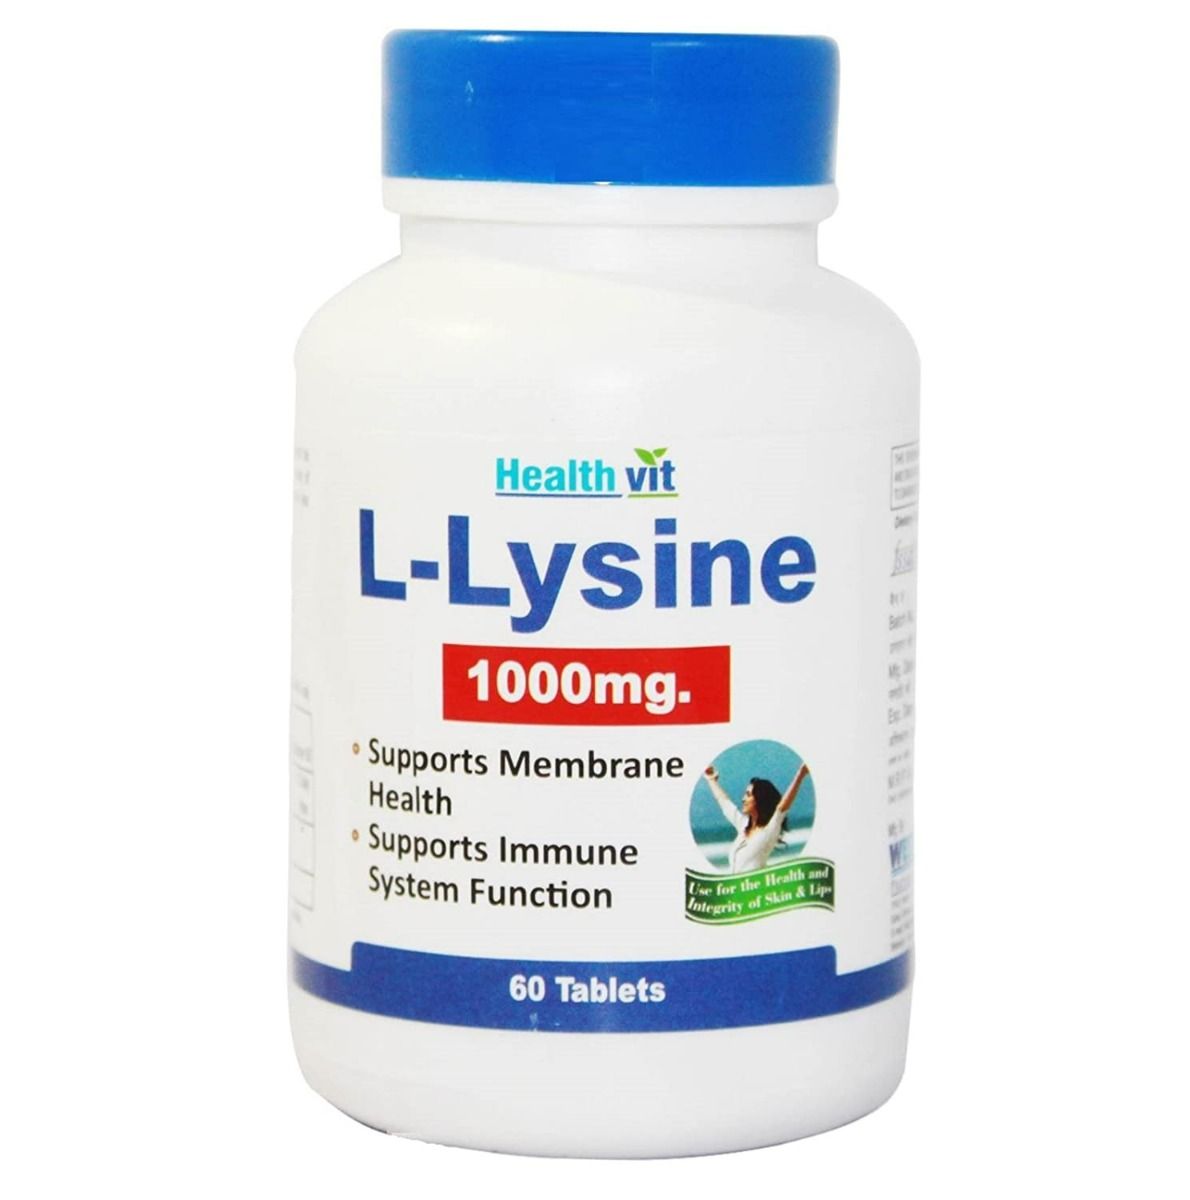 Healthvit L-Lysine 1000 mg, 60 Tablets, Pack of 1 